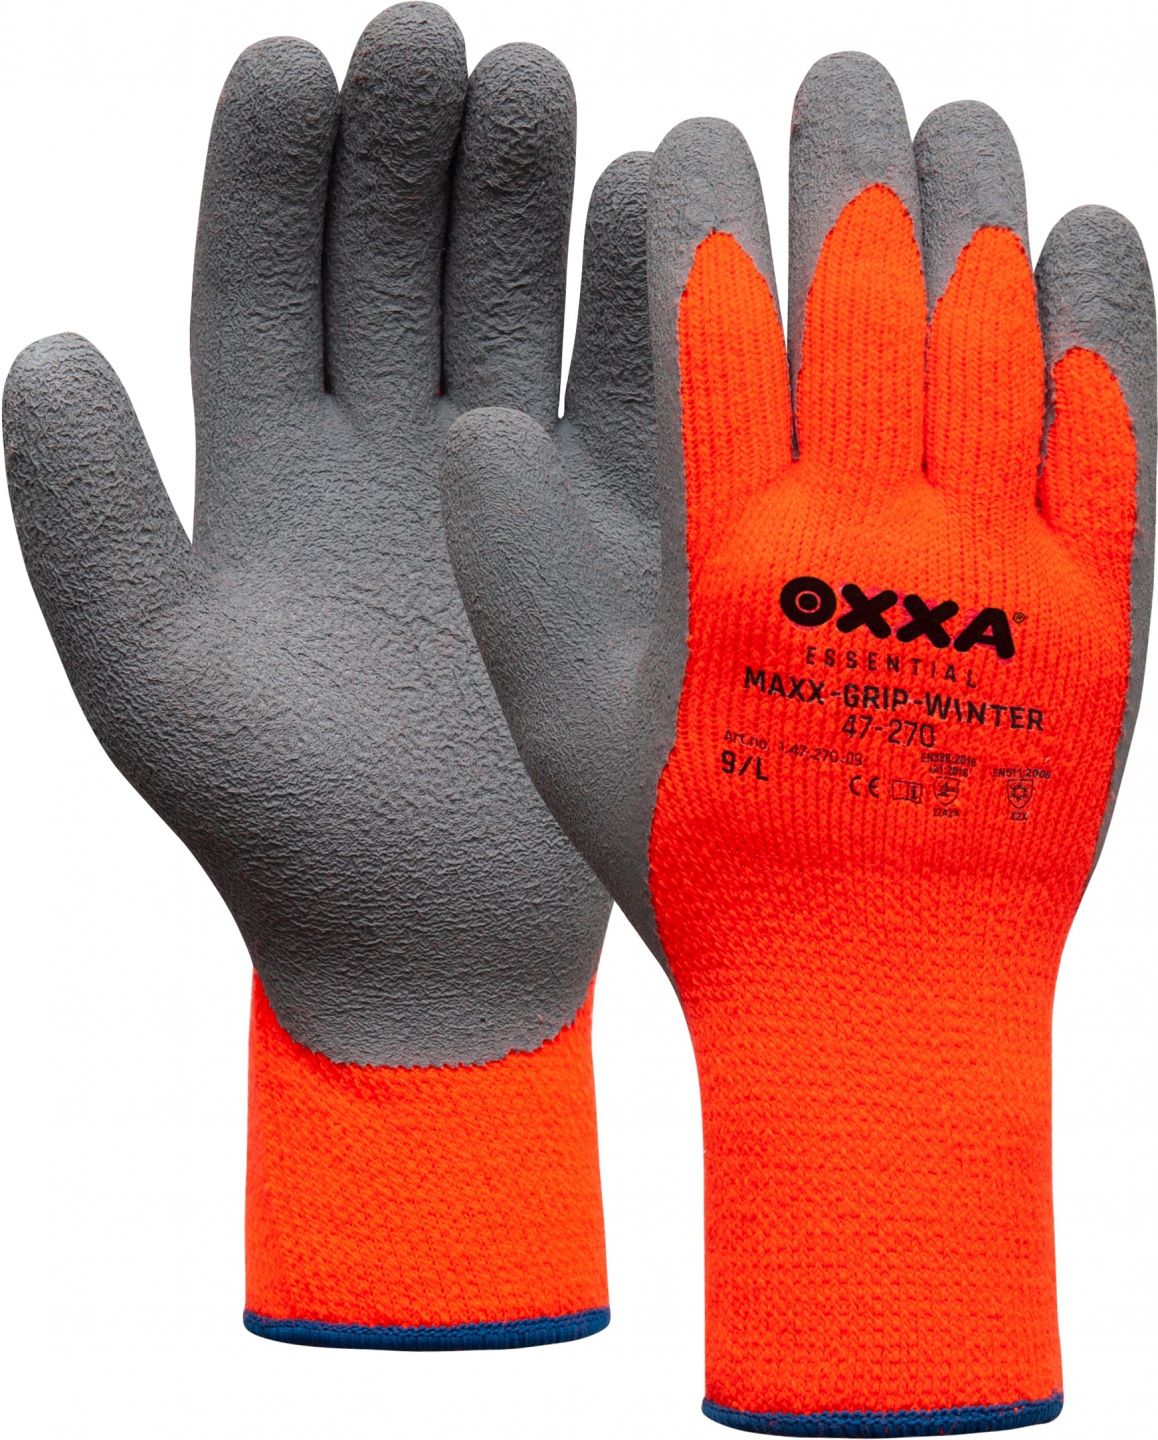 OXXA Maxx-Grip Winter 47-270 werkhandschoenen